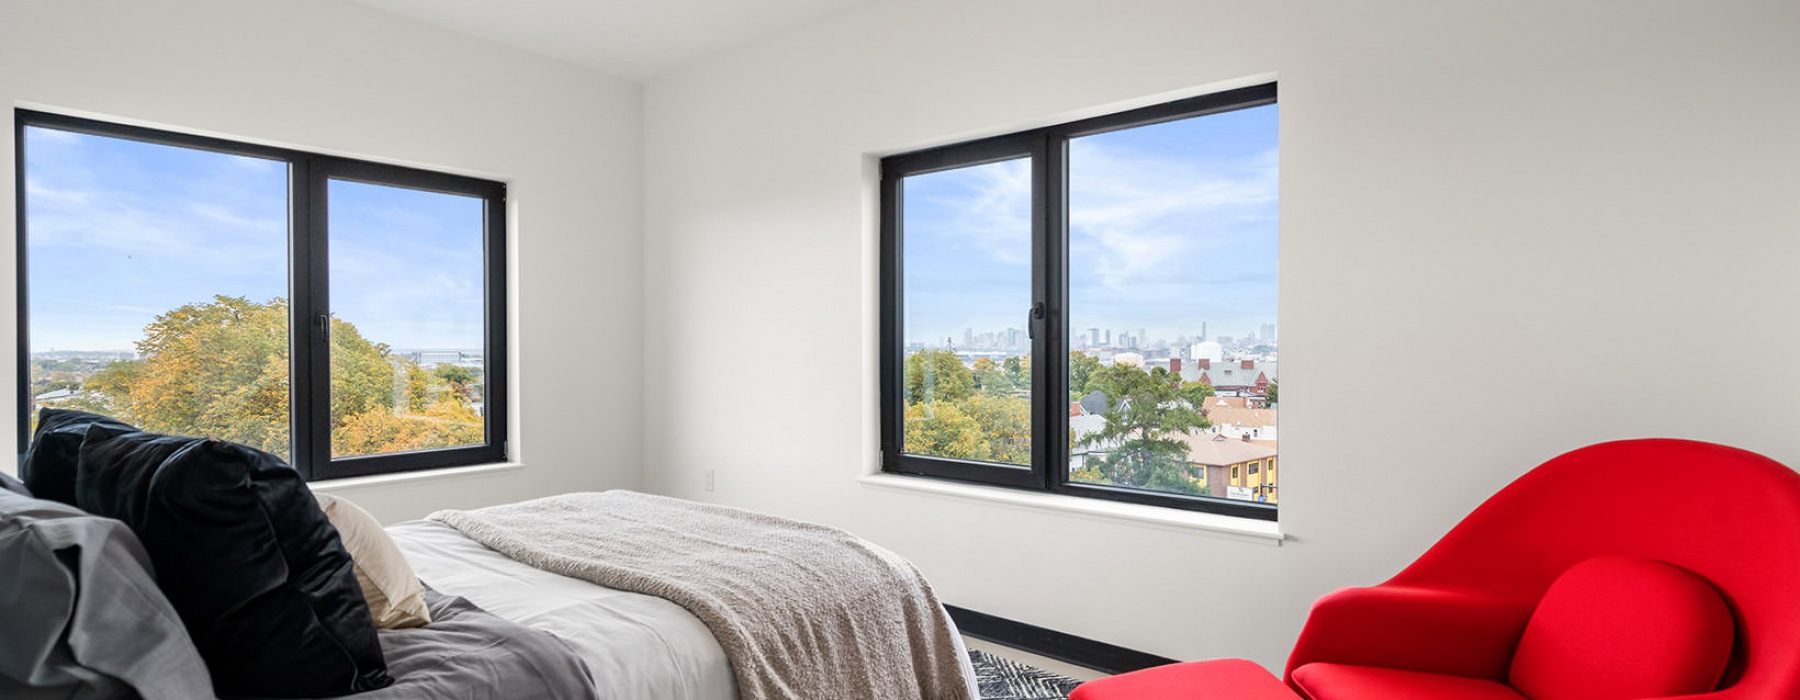 spacious bedroom with neighborhood views